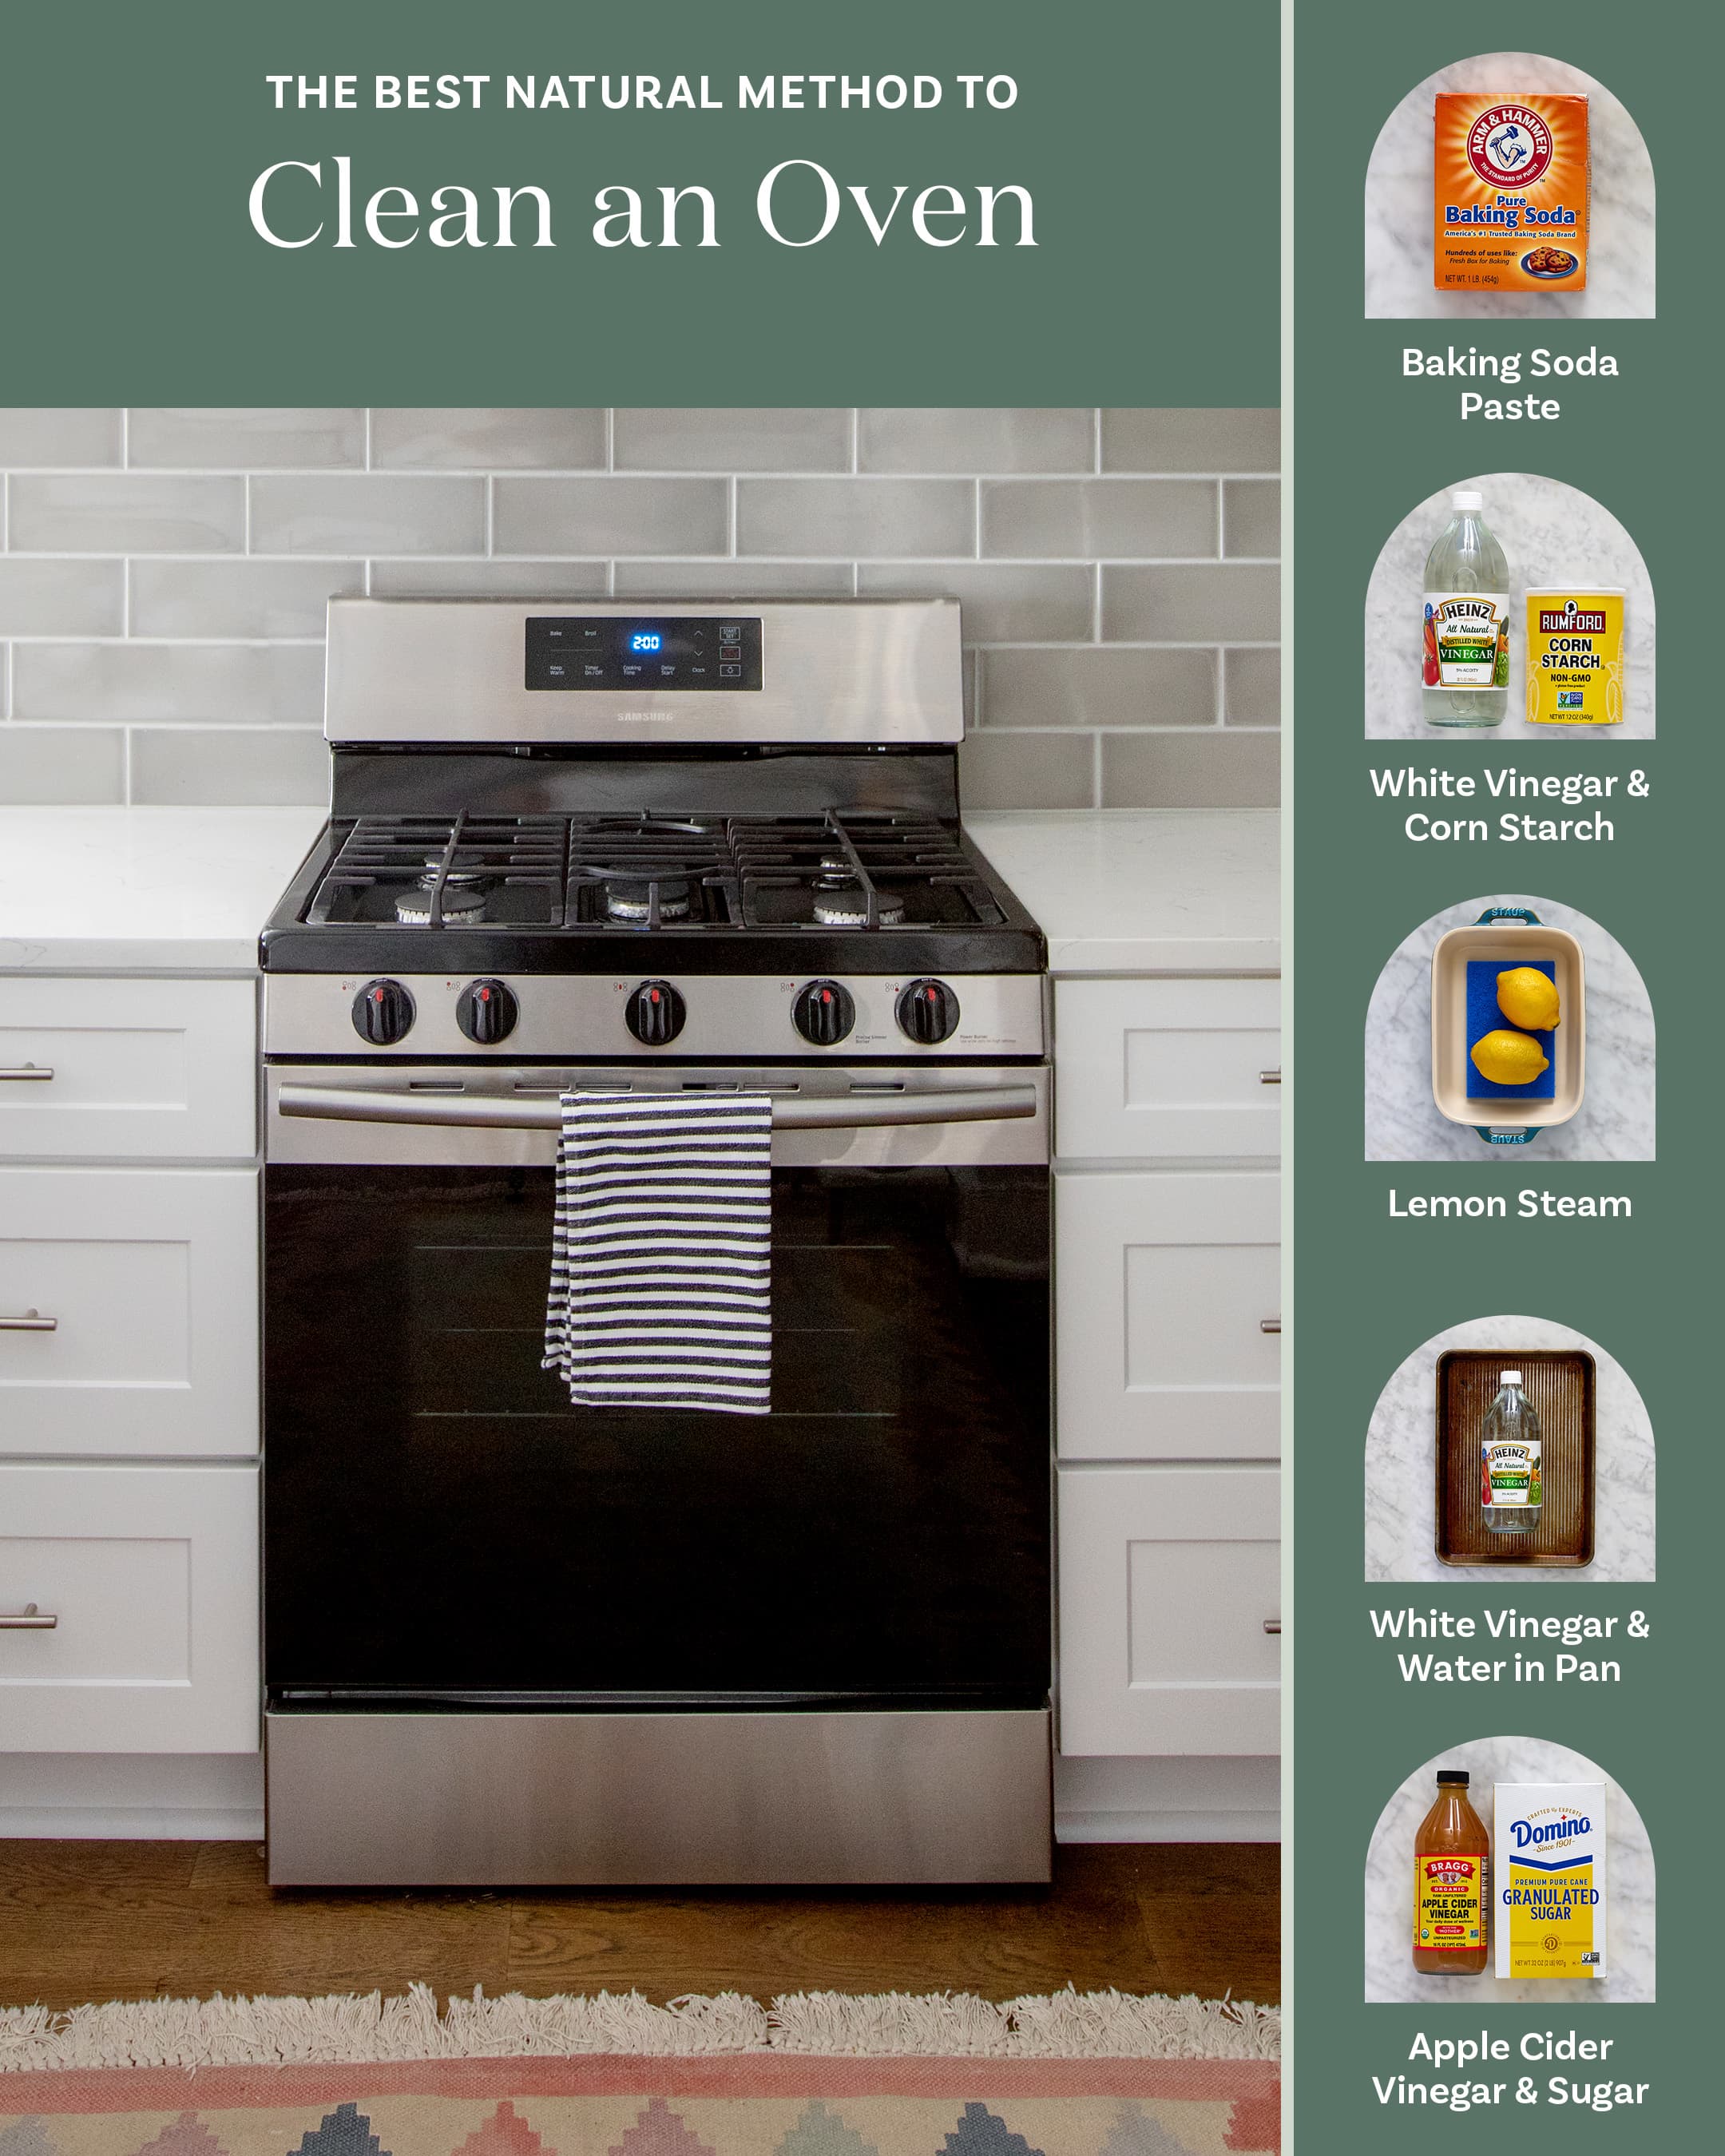 https://cdn.apartmenttherapy.info/image/upload/v1682697704/k/Photo/Series/2023-03-skills-showdown-natural-clean-oven/cleaning-showdown-oven-natural-methods.jpg